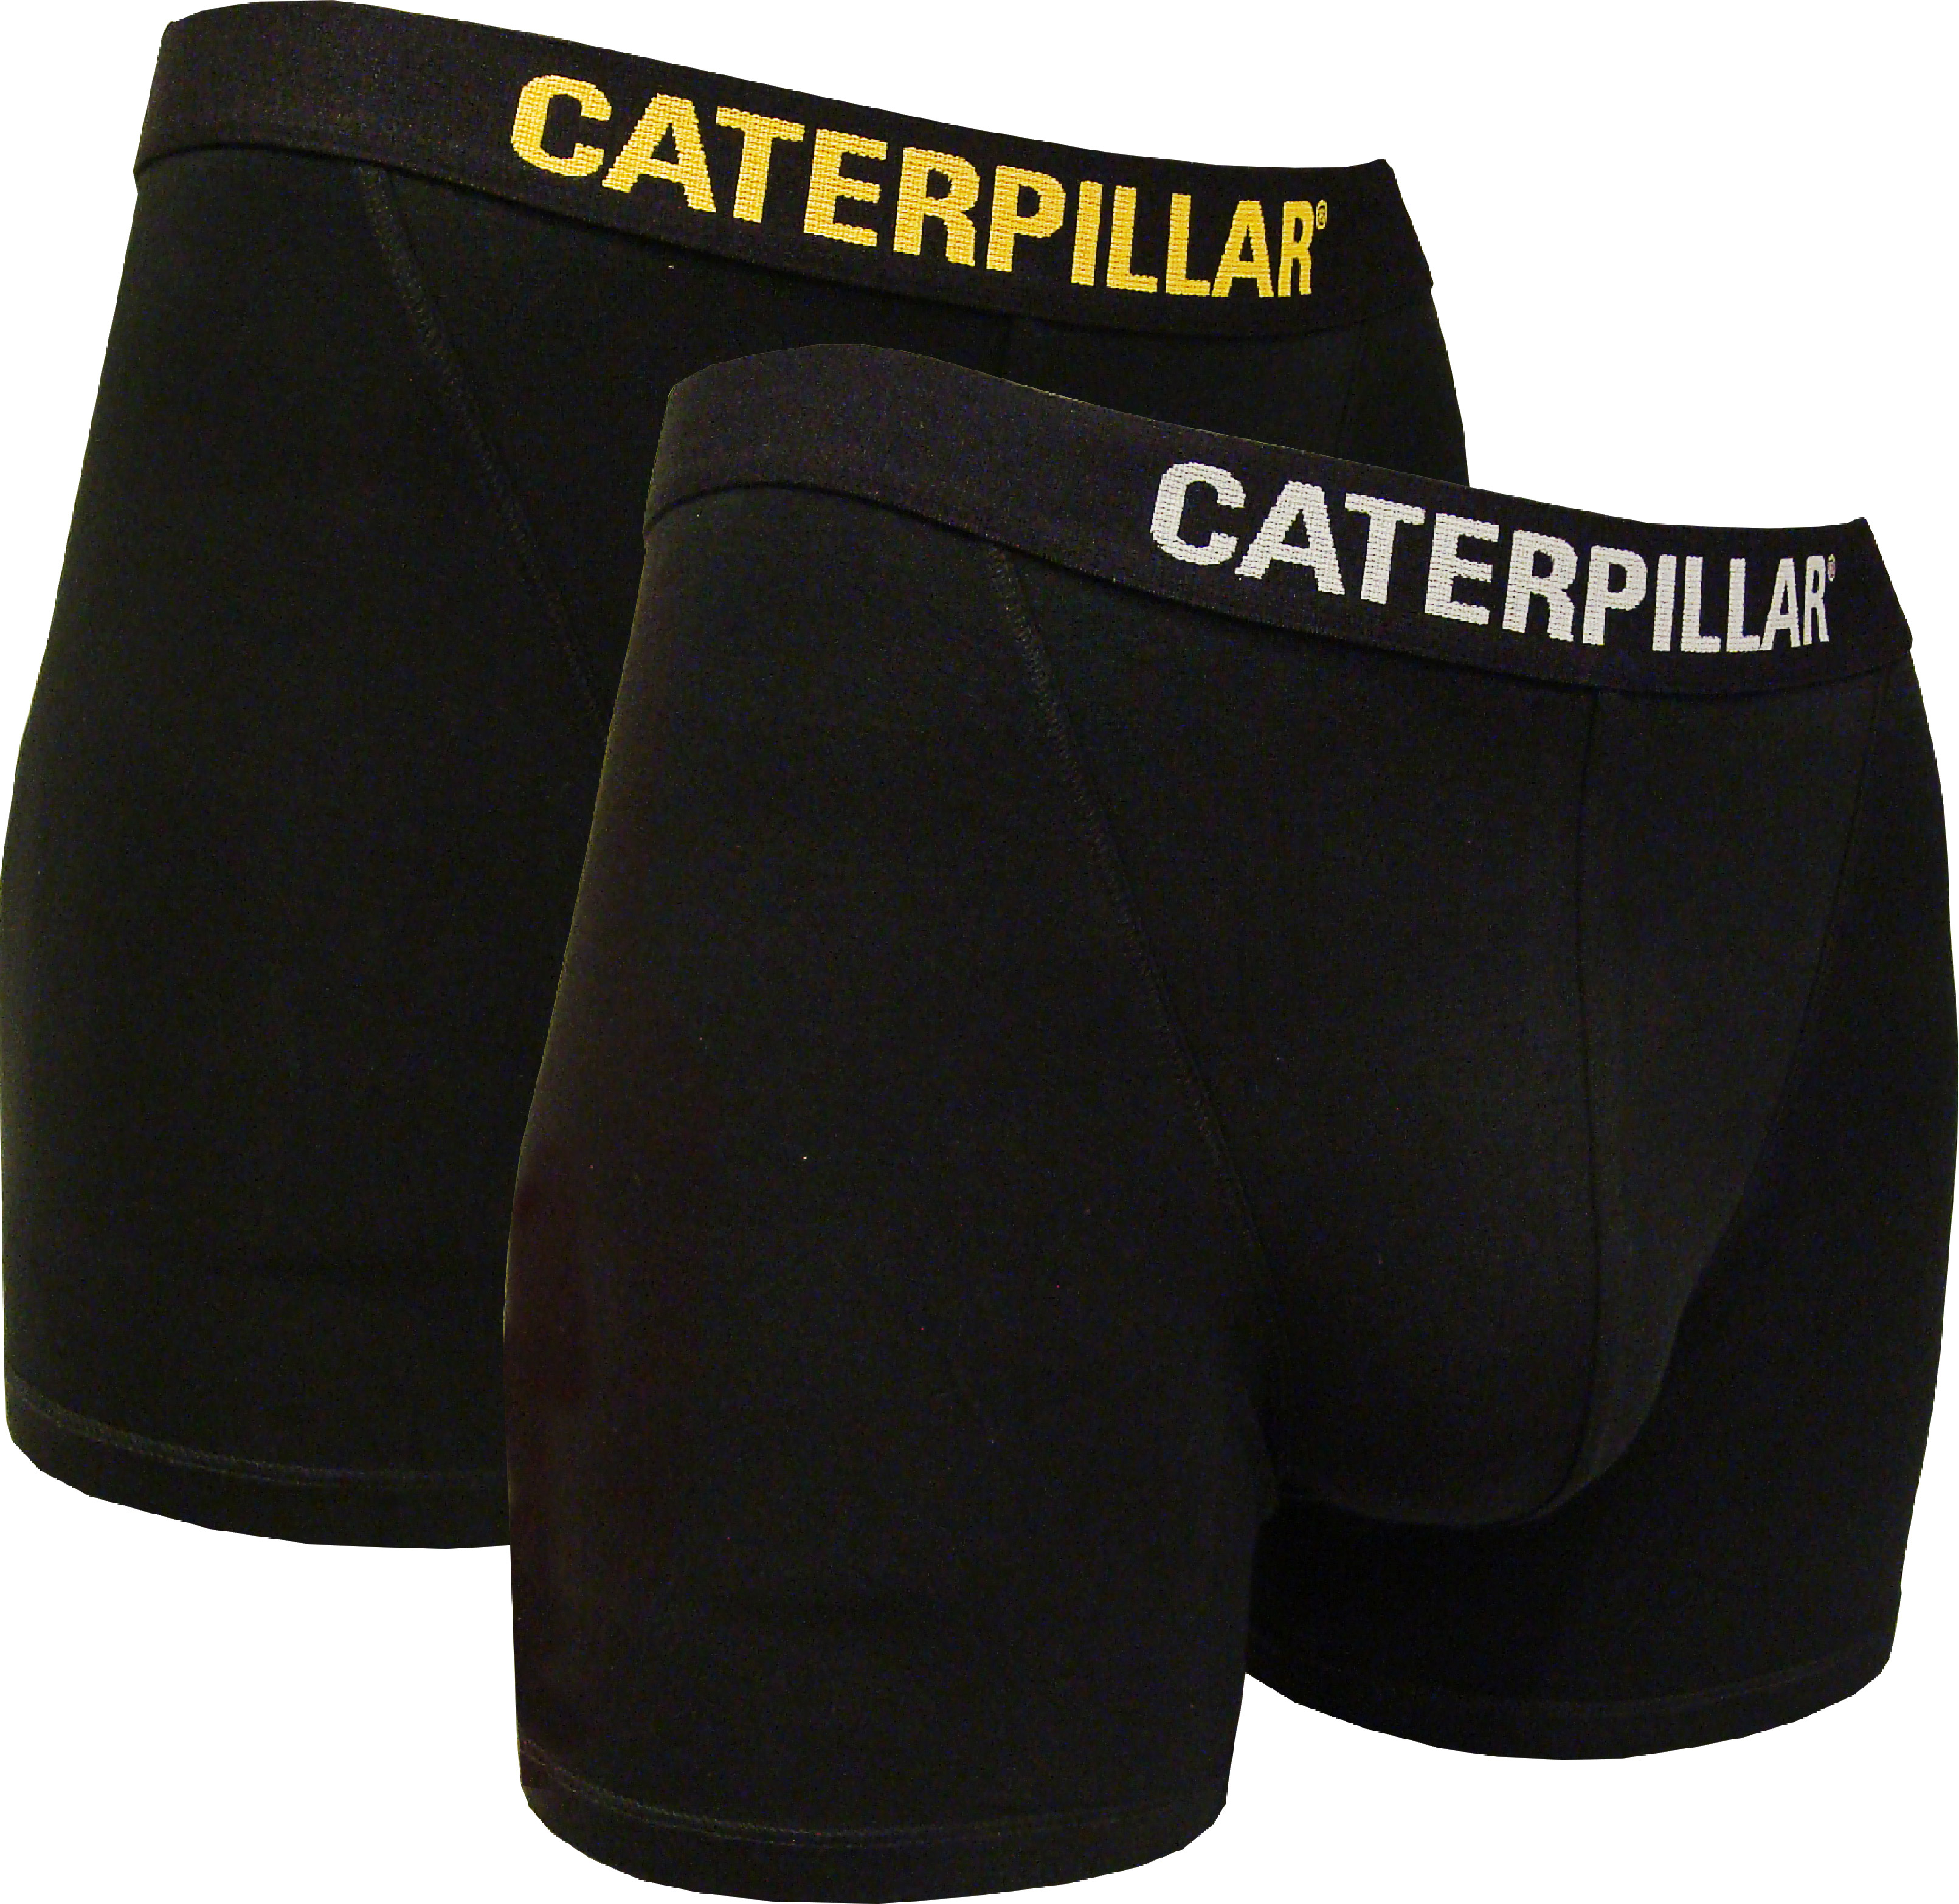 CAT Boxershorts 2 pack - Zwart - M